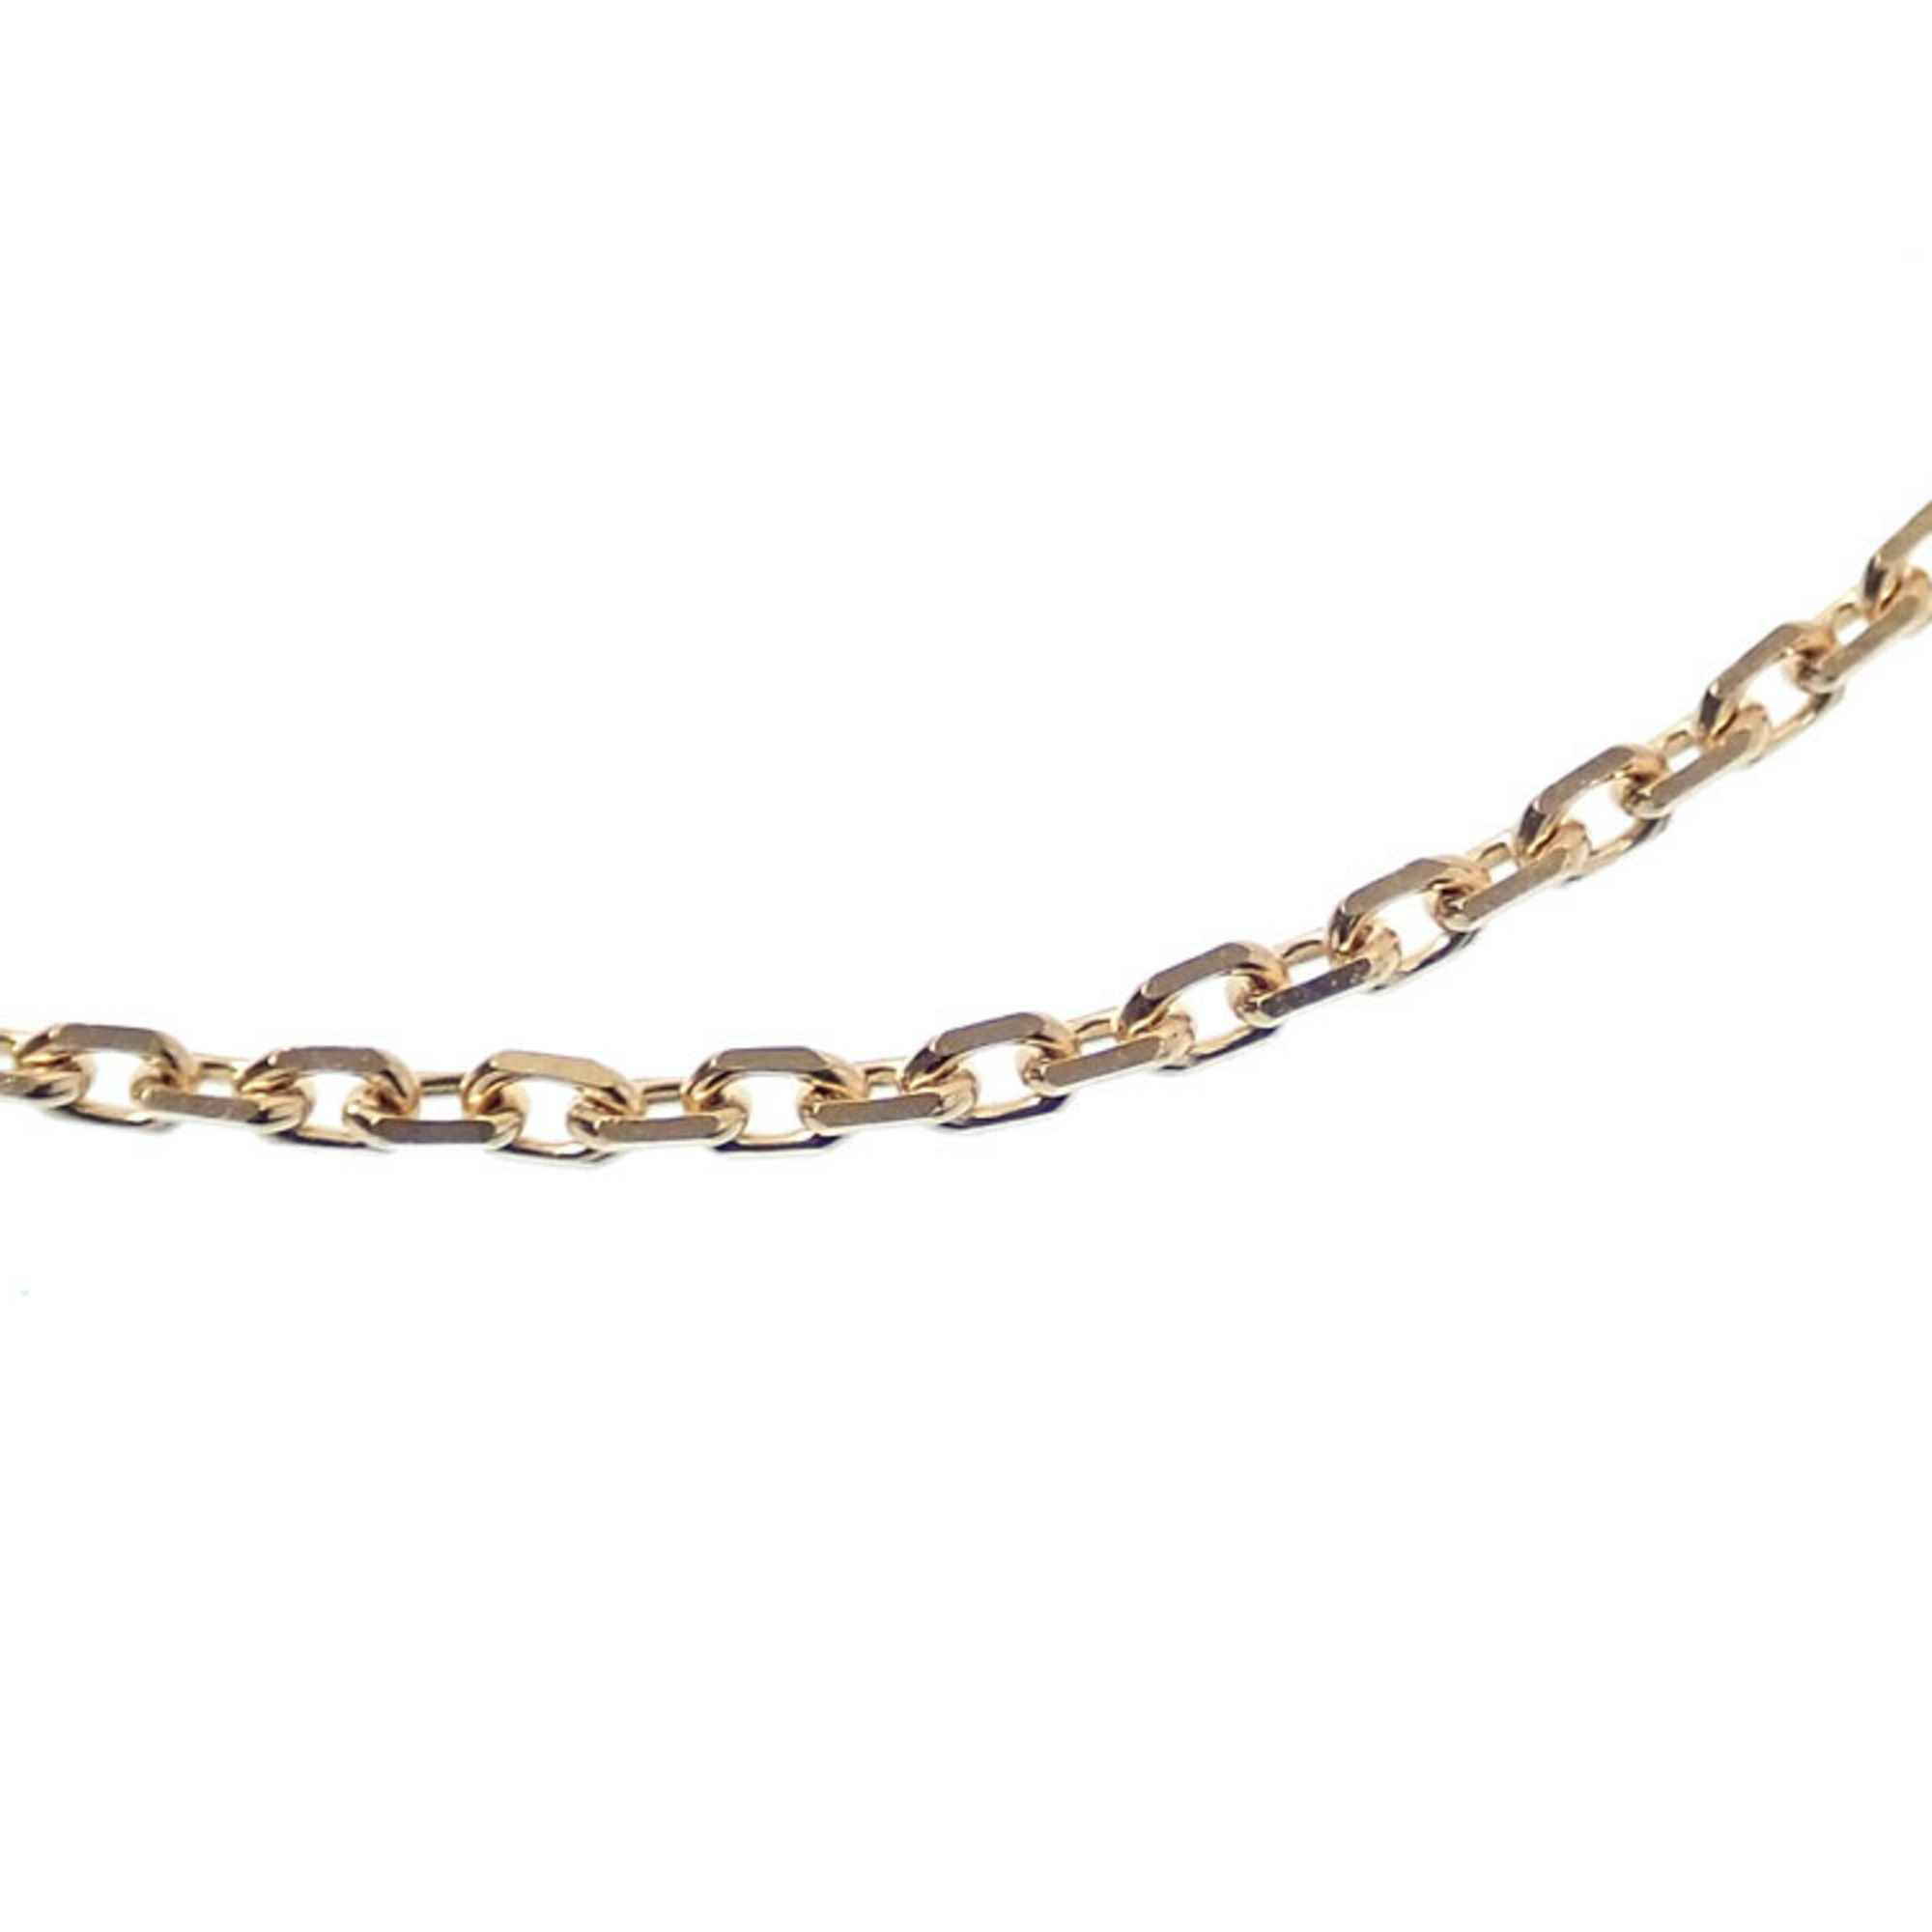 Van Cleef & Arpels Sweet Alhambra Papillon Bracelet for Women, Mother of Pearl, K18YG, 1.8g, 18K Yellow Gold, 750, Butterfly, VCARF69000, 042147